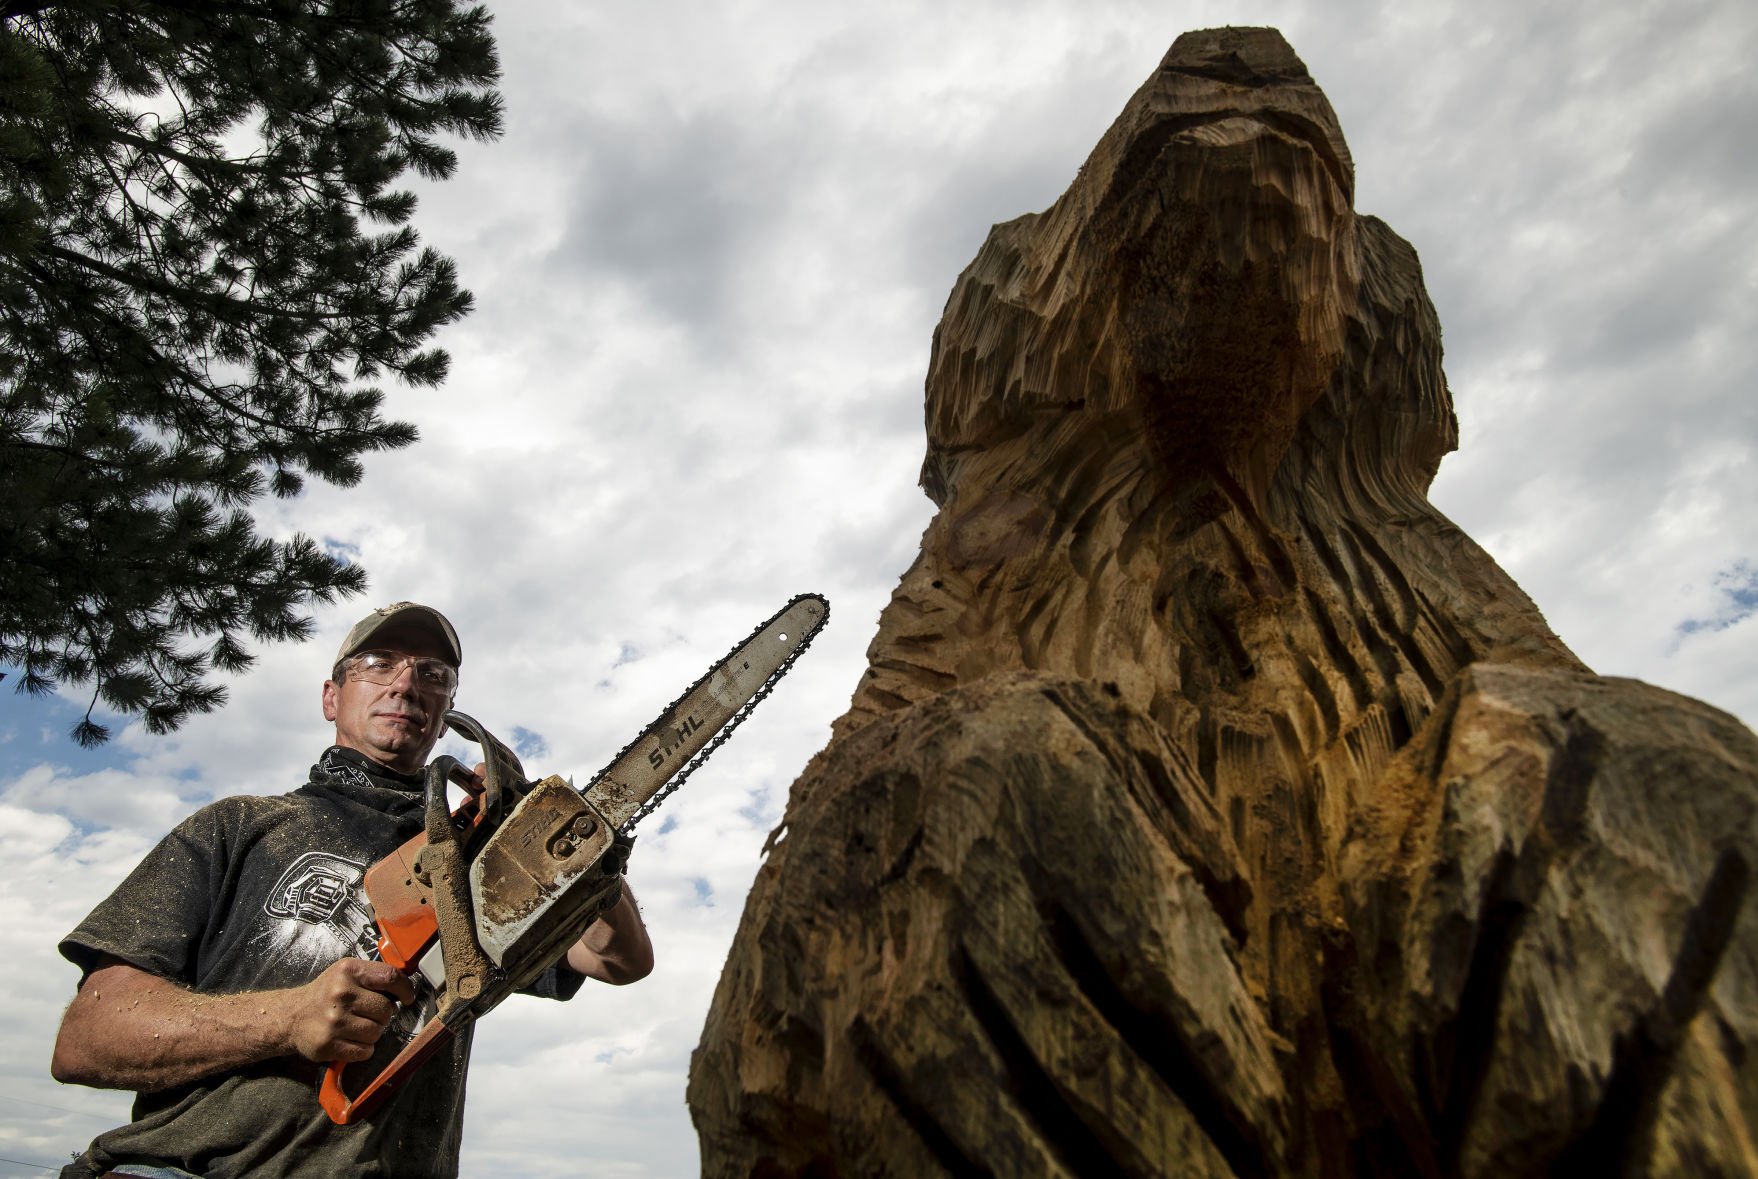 Colorado Bear Chainsaw Carving